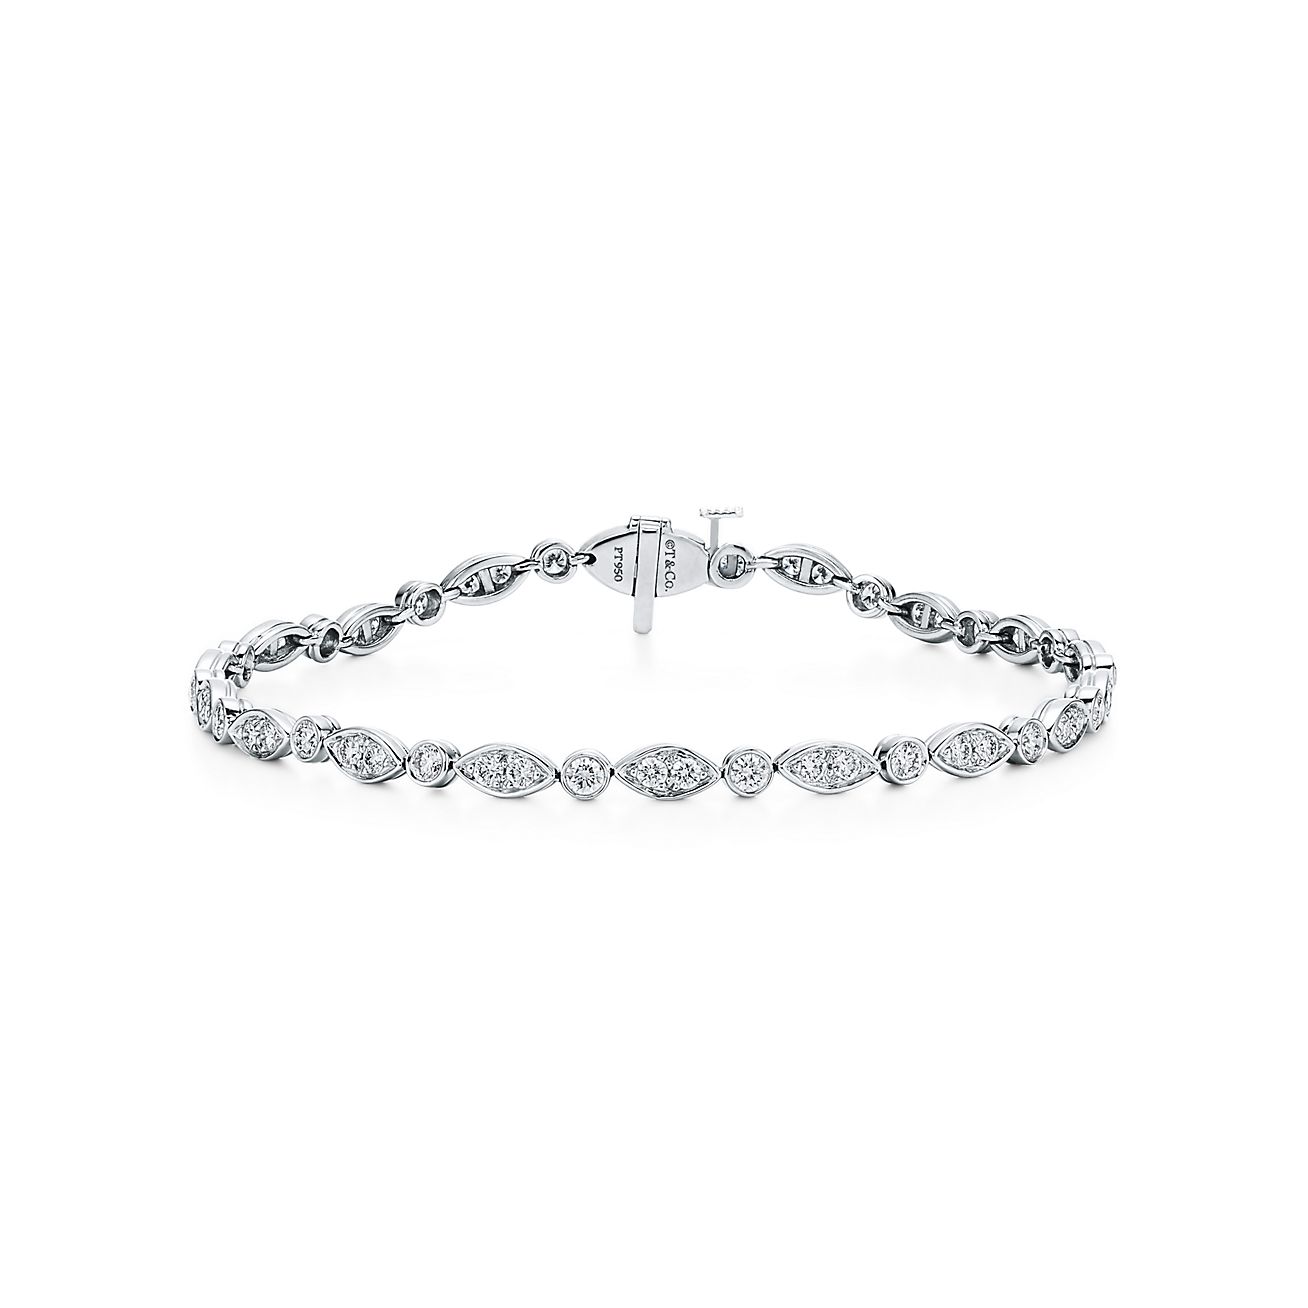 Tiffany Jazz® tennis bracelet in 